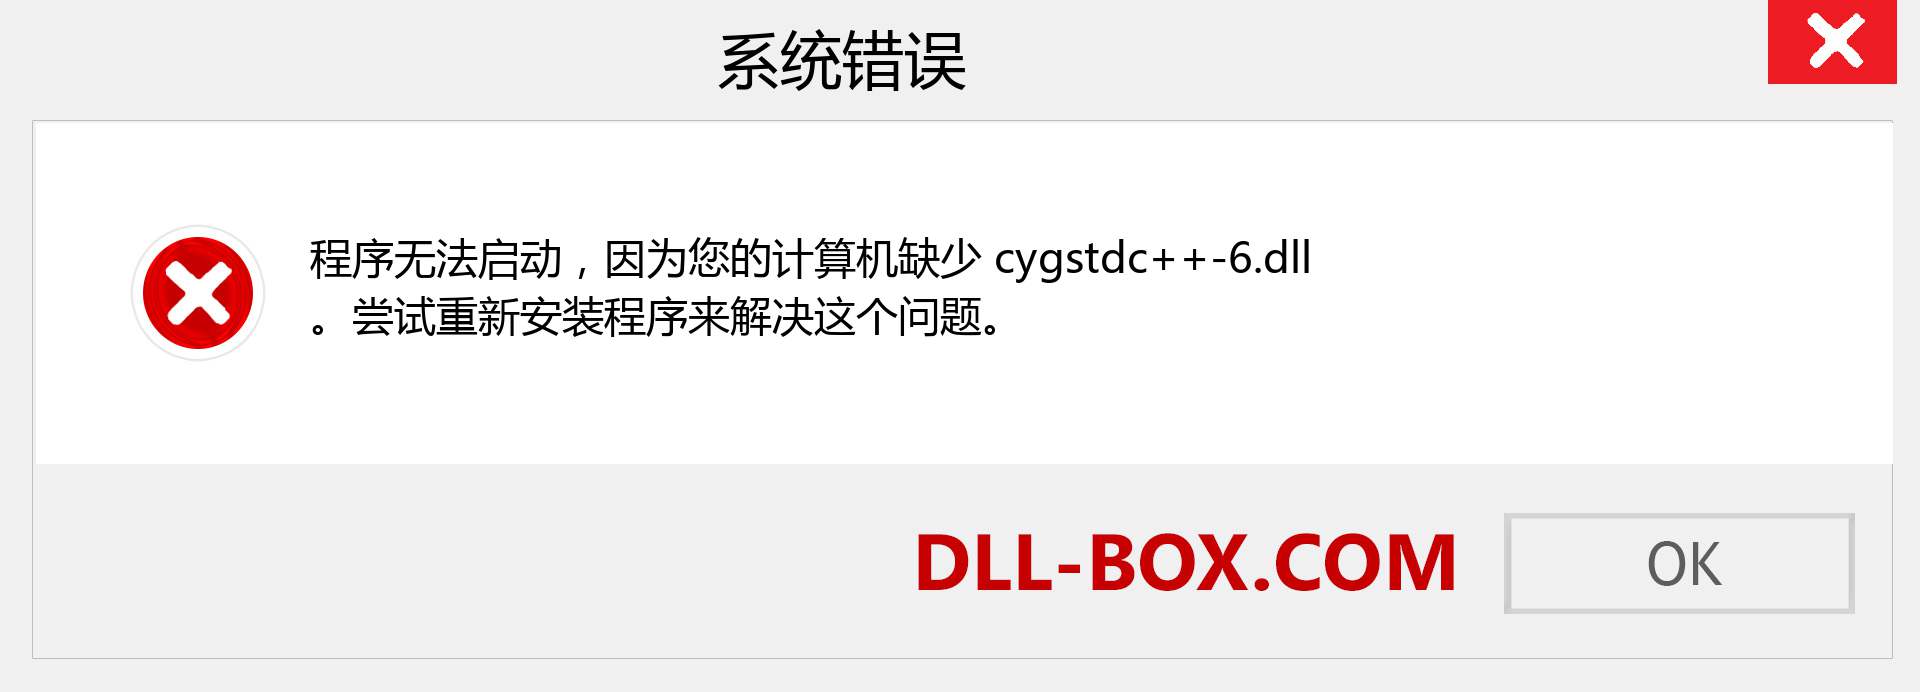 cygstdc++-6.dll 文件丢失？。 适用于 Windows 7、8、10 的下载 - 修复 Windows、照片、图像上的 cygstdc++-6 dll 丢失错误